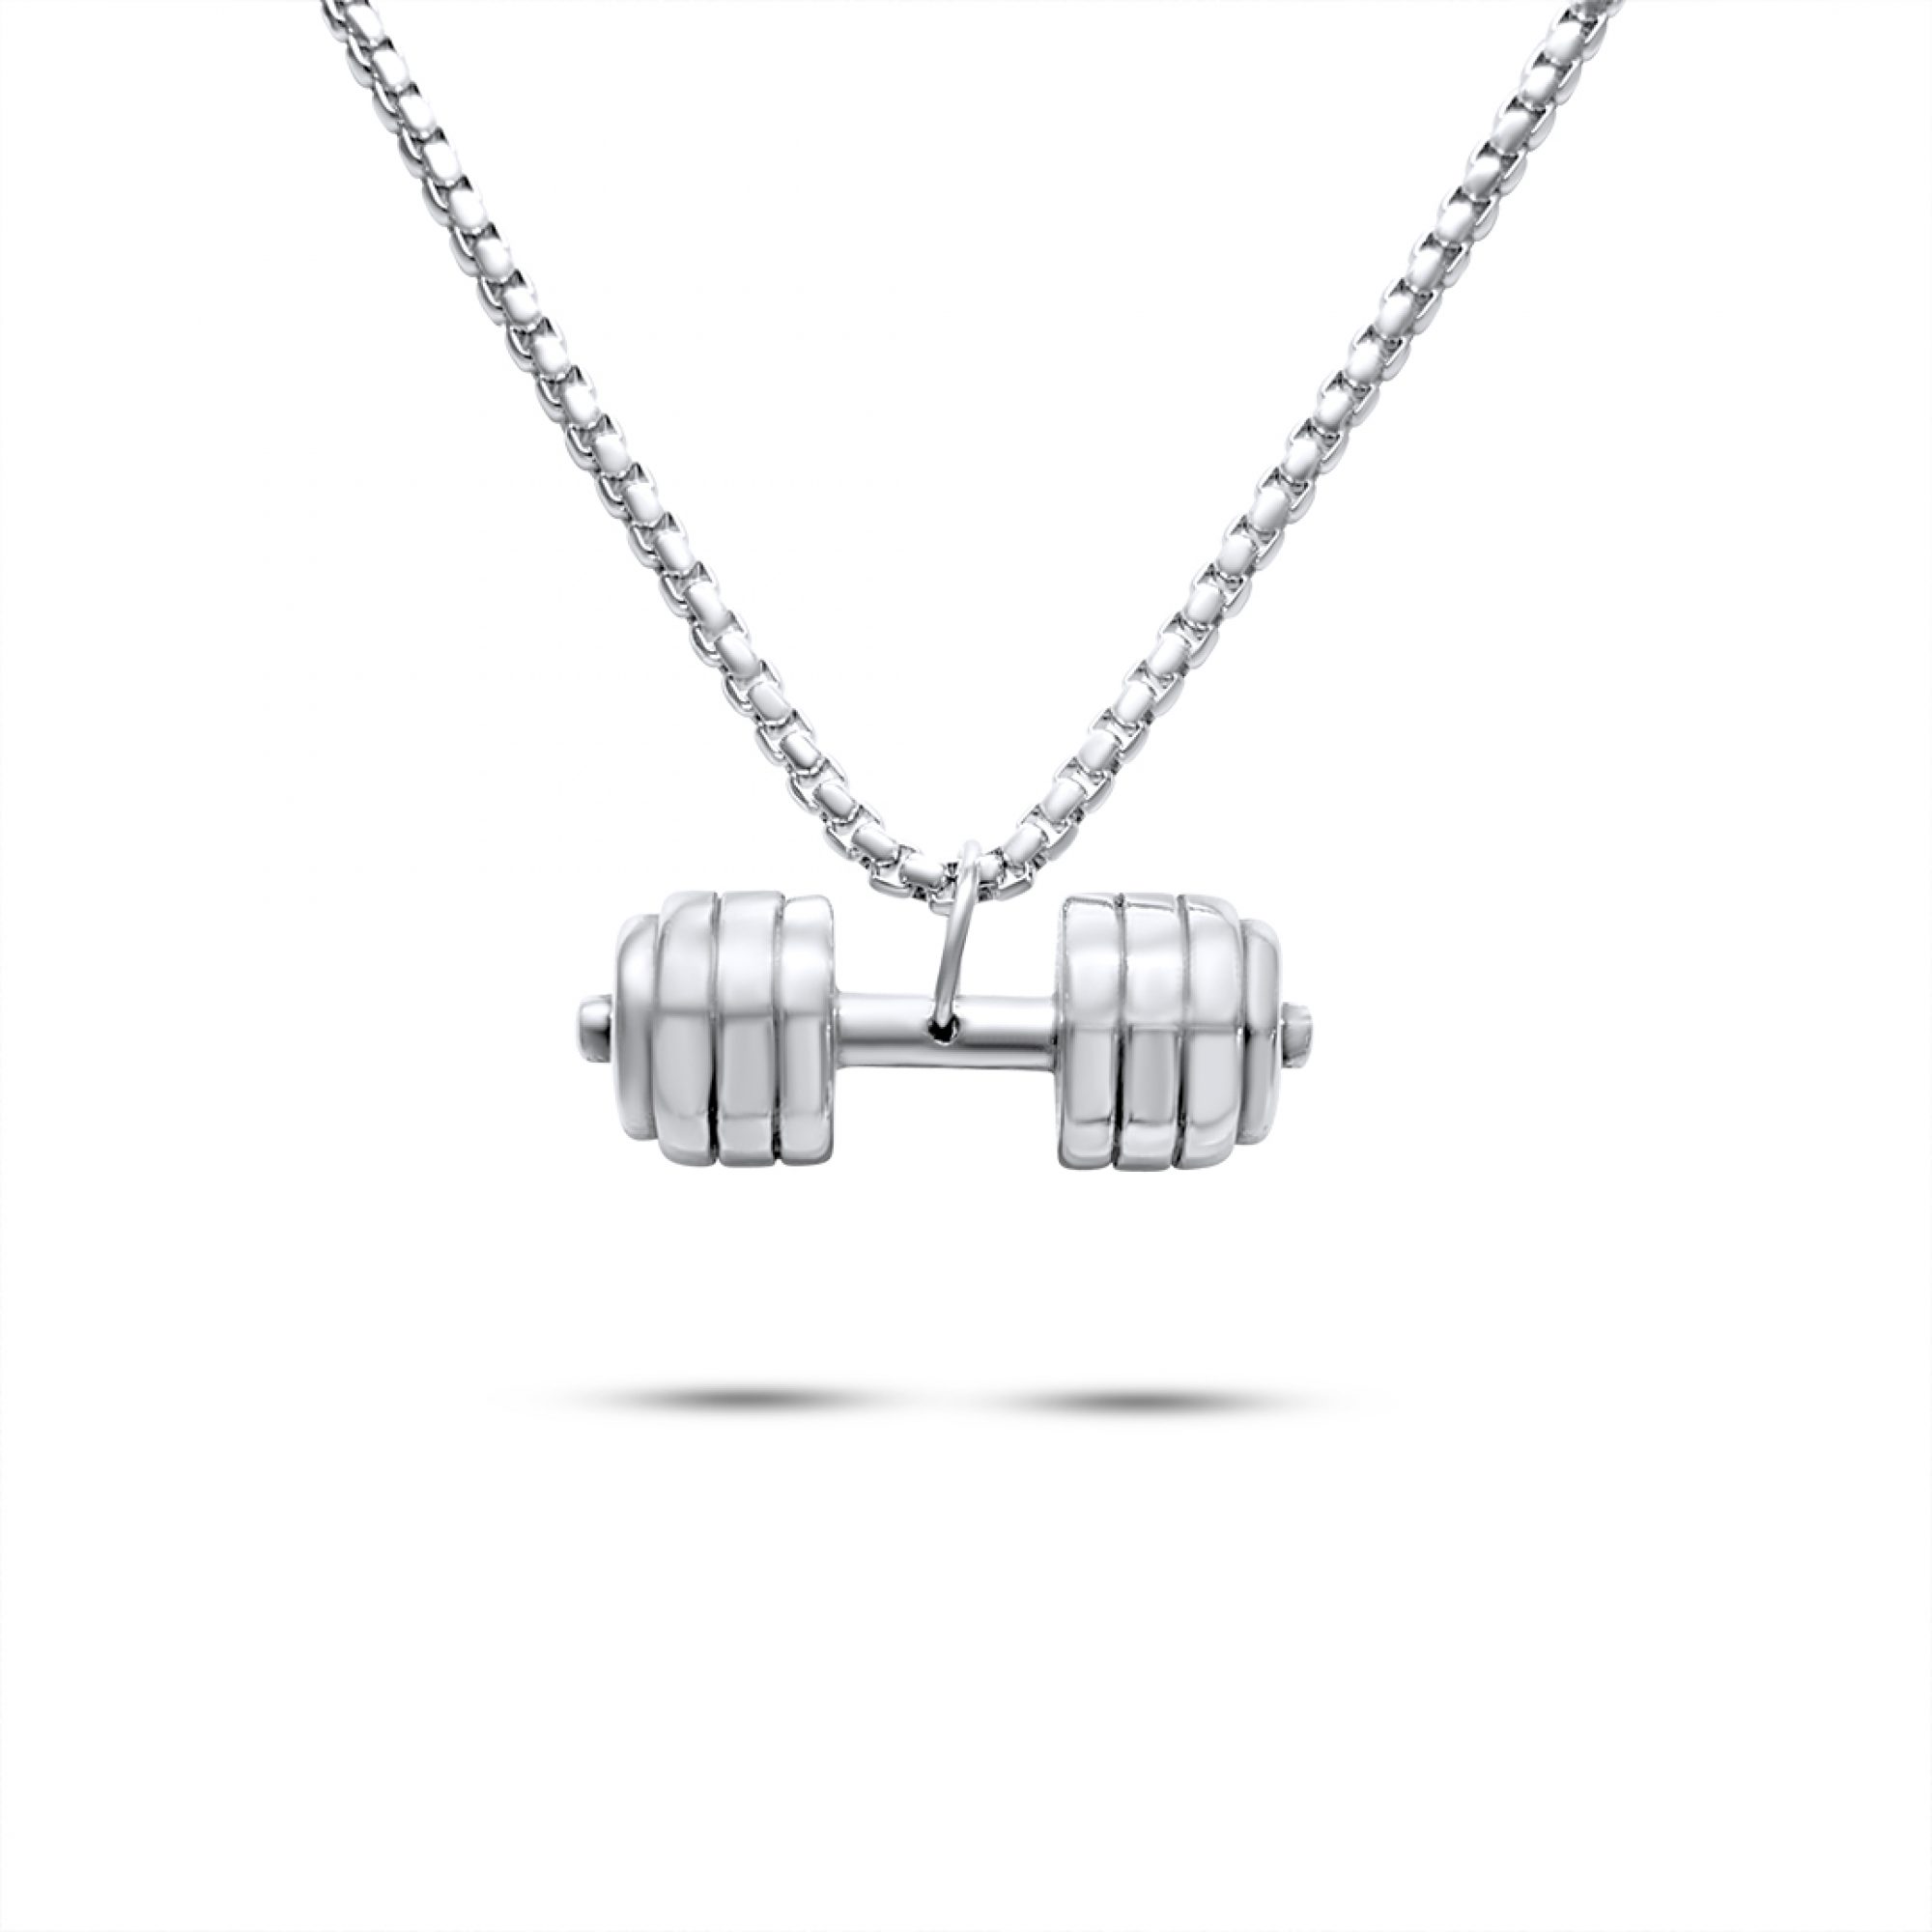 Steel weight bar necklace